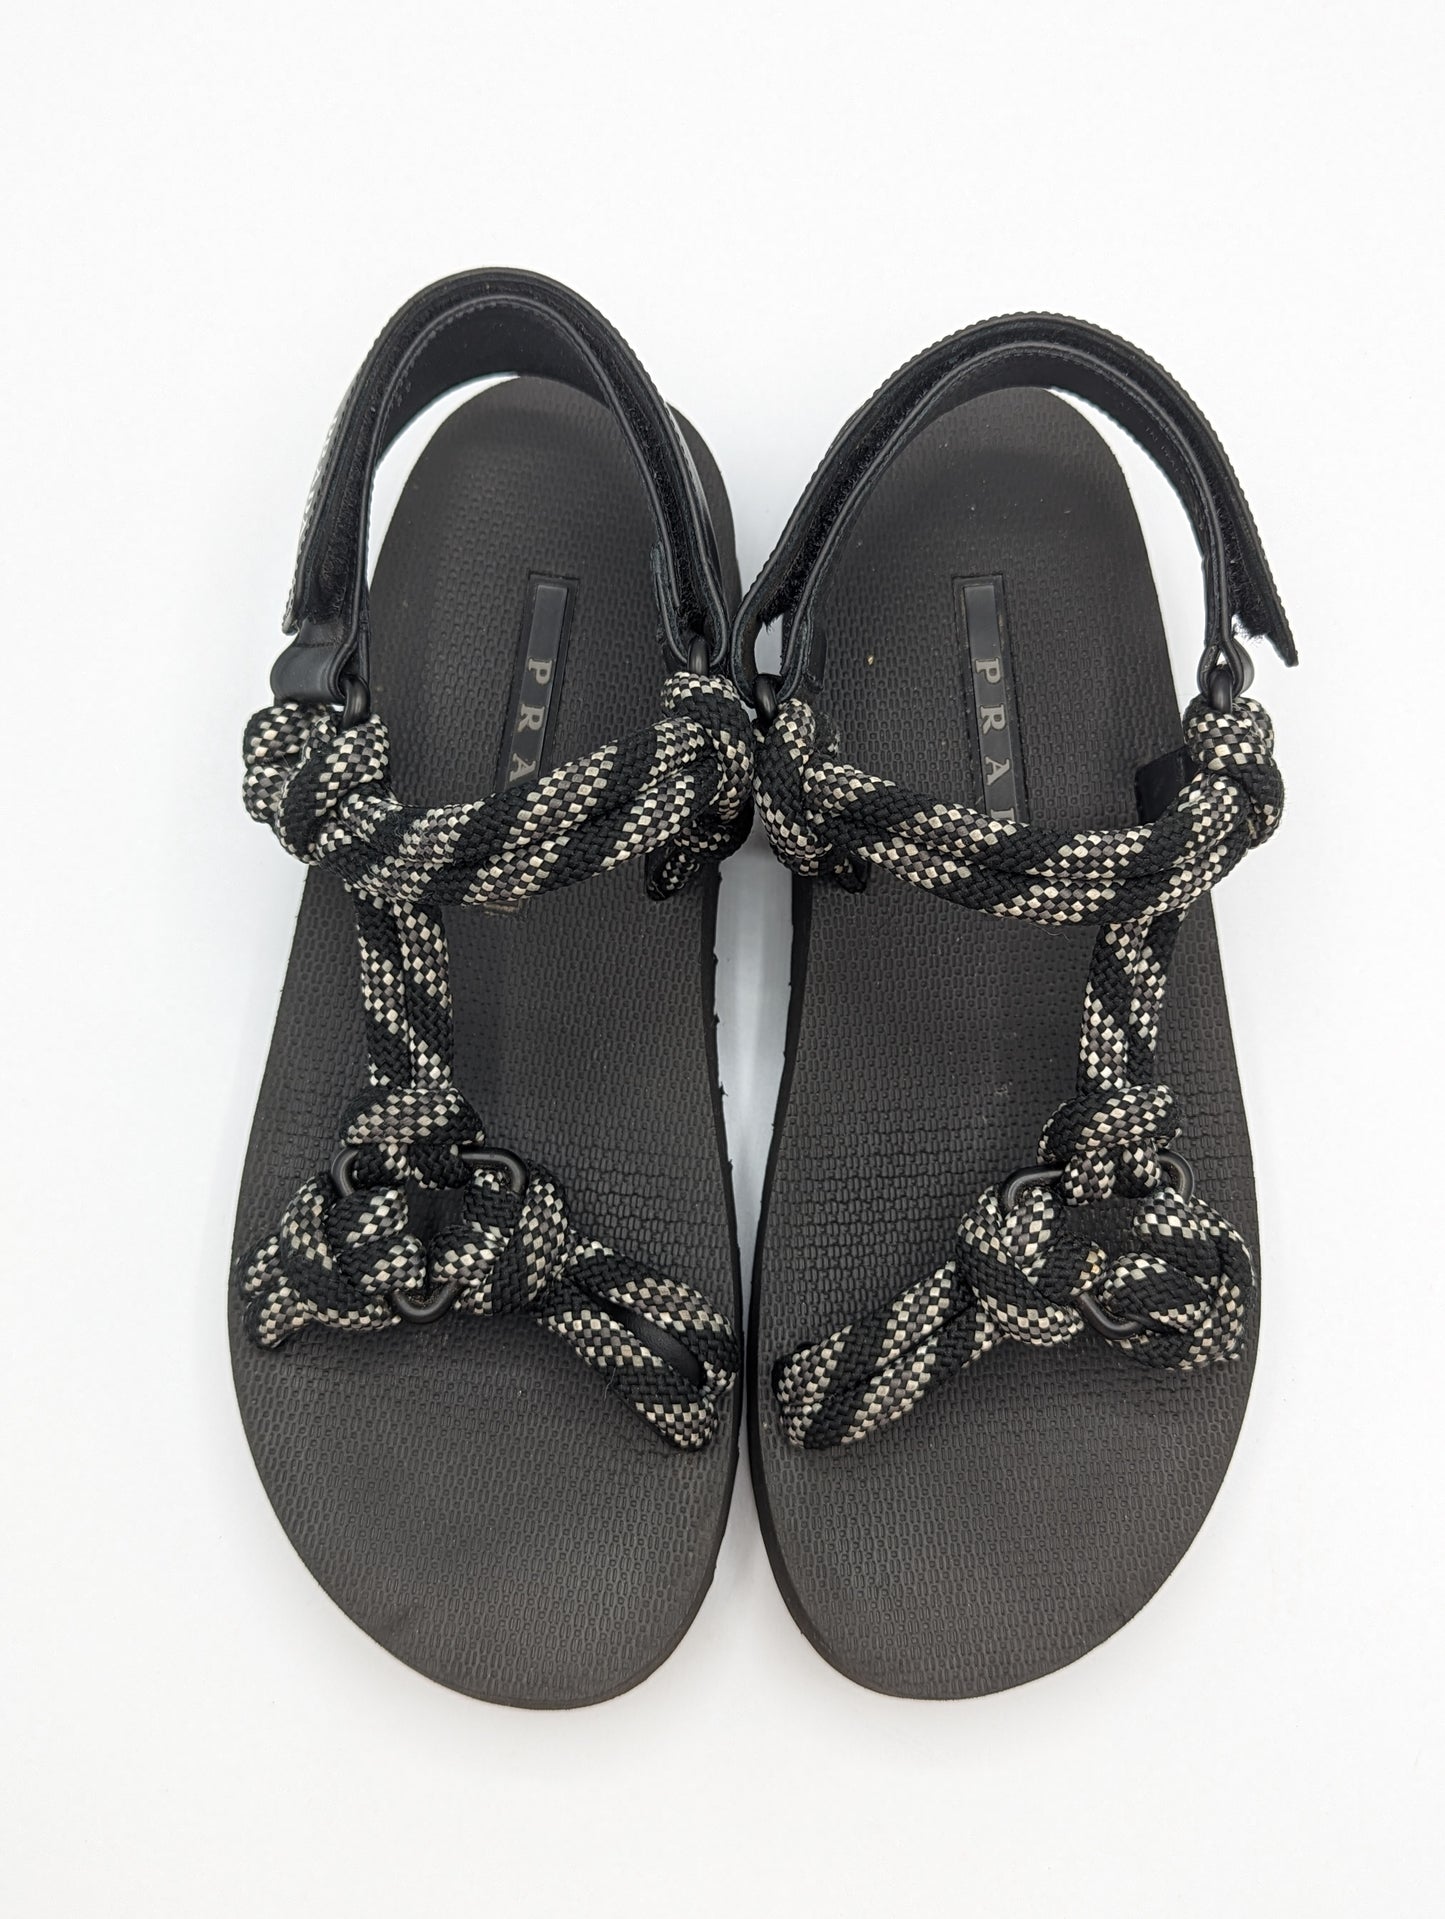 Prada Black Rope Sandals Size 39